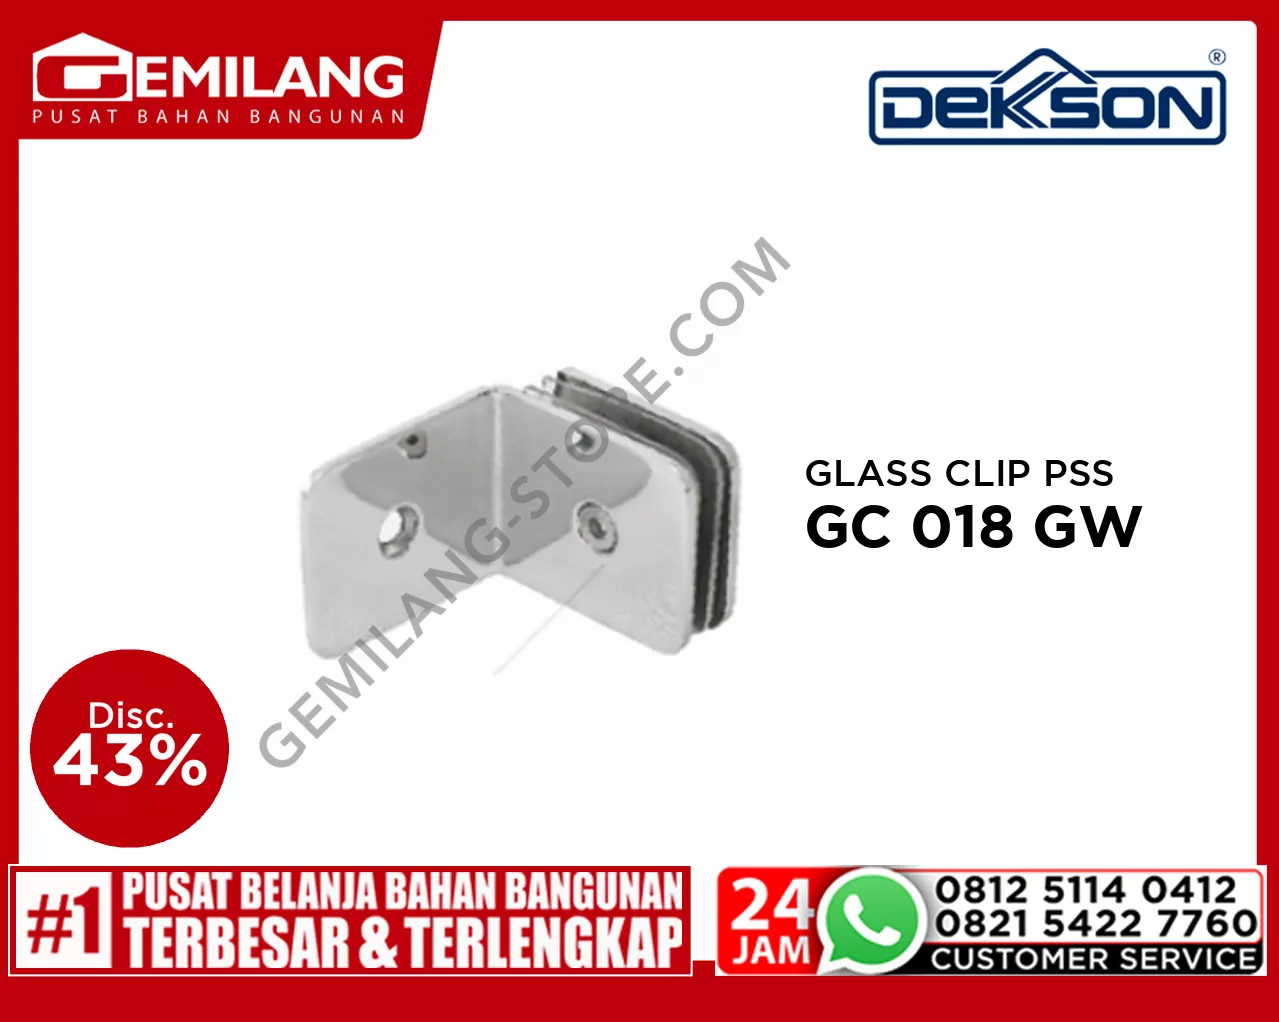 DEKKSON GLASS CLIP GC 018 GW PSS